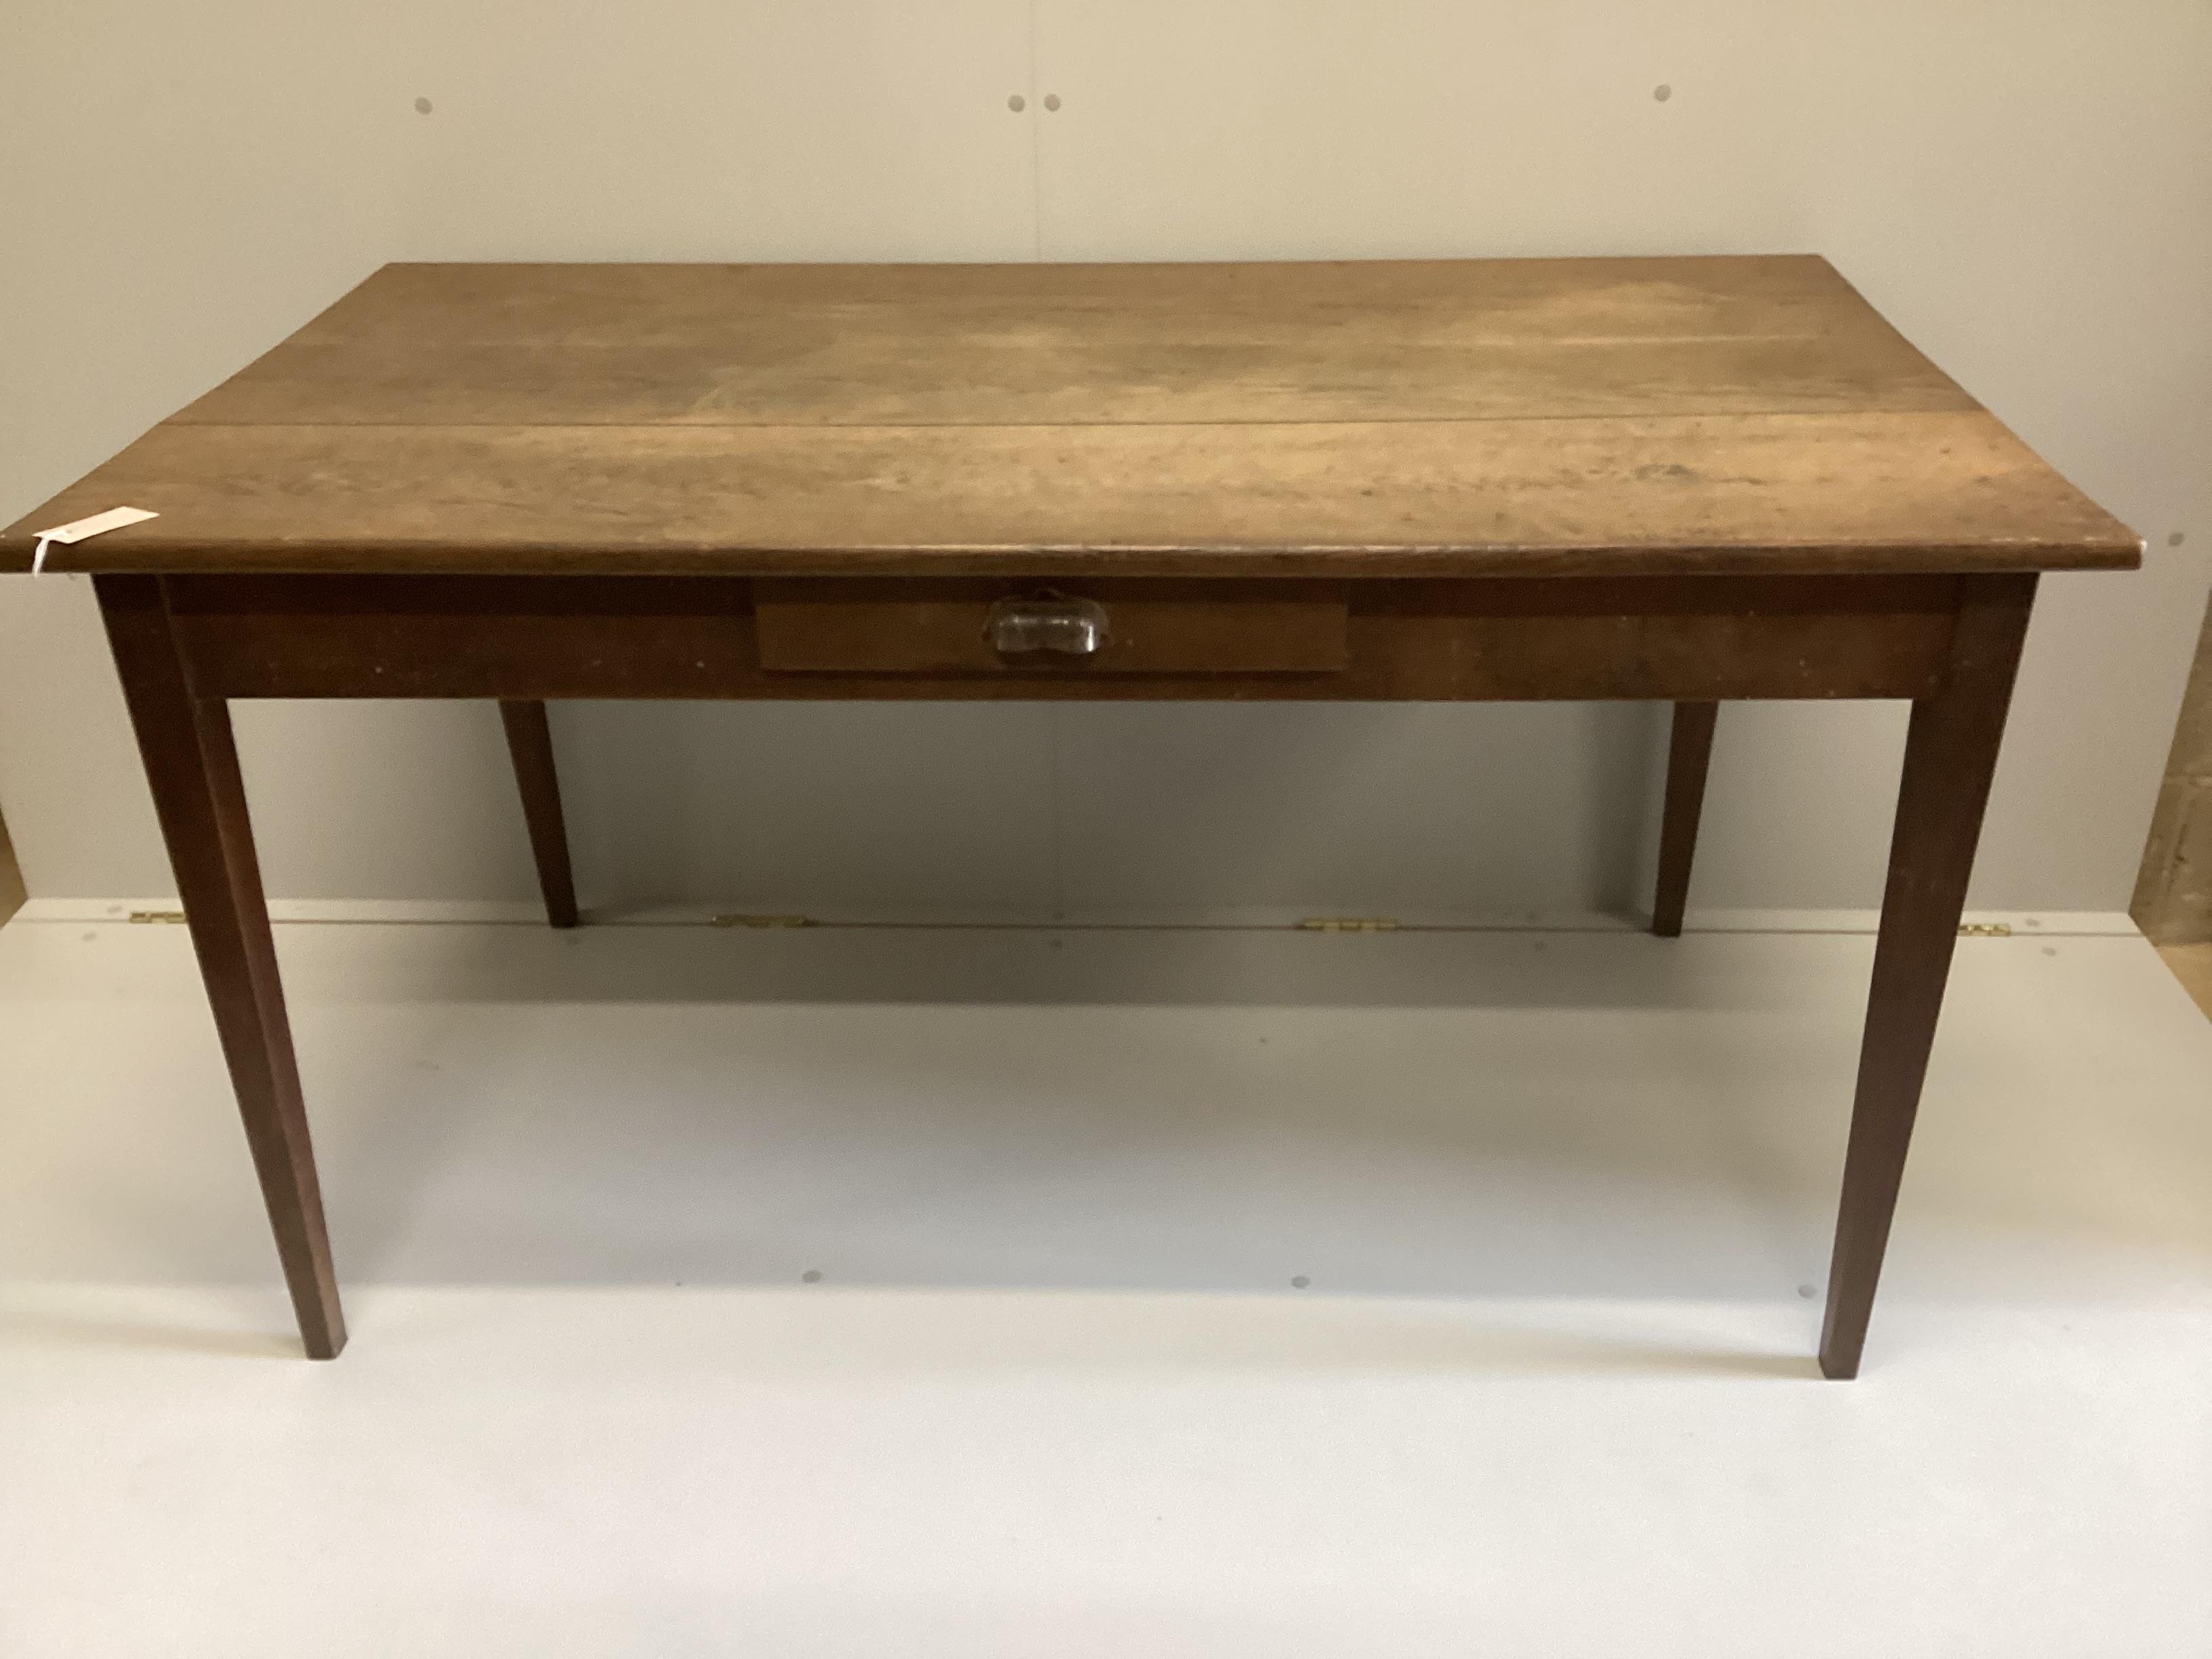 A 19th French rectangular oak kitchen table, width 139cm, depth 76cm, height 74cm